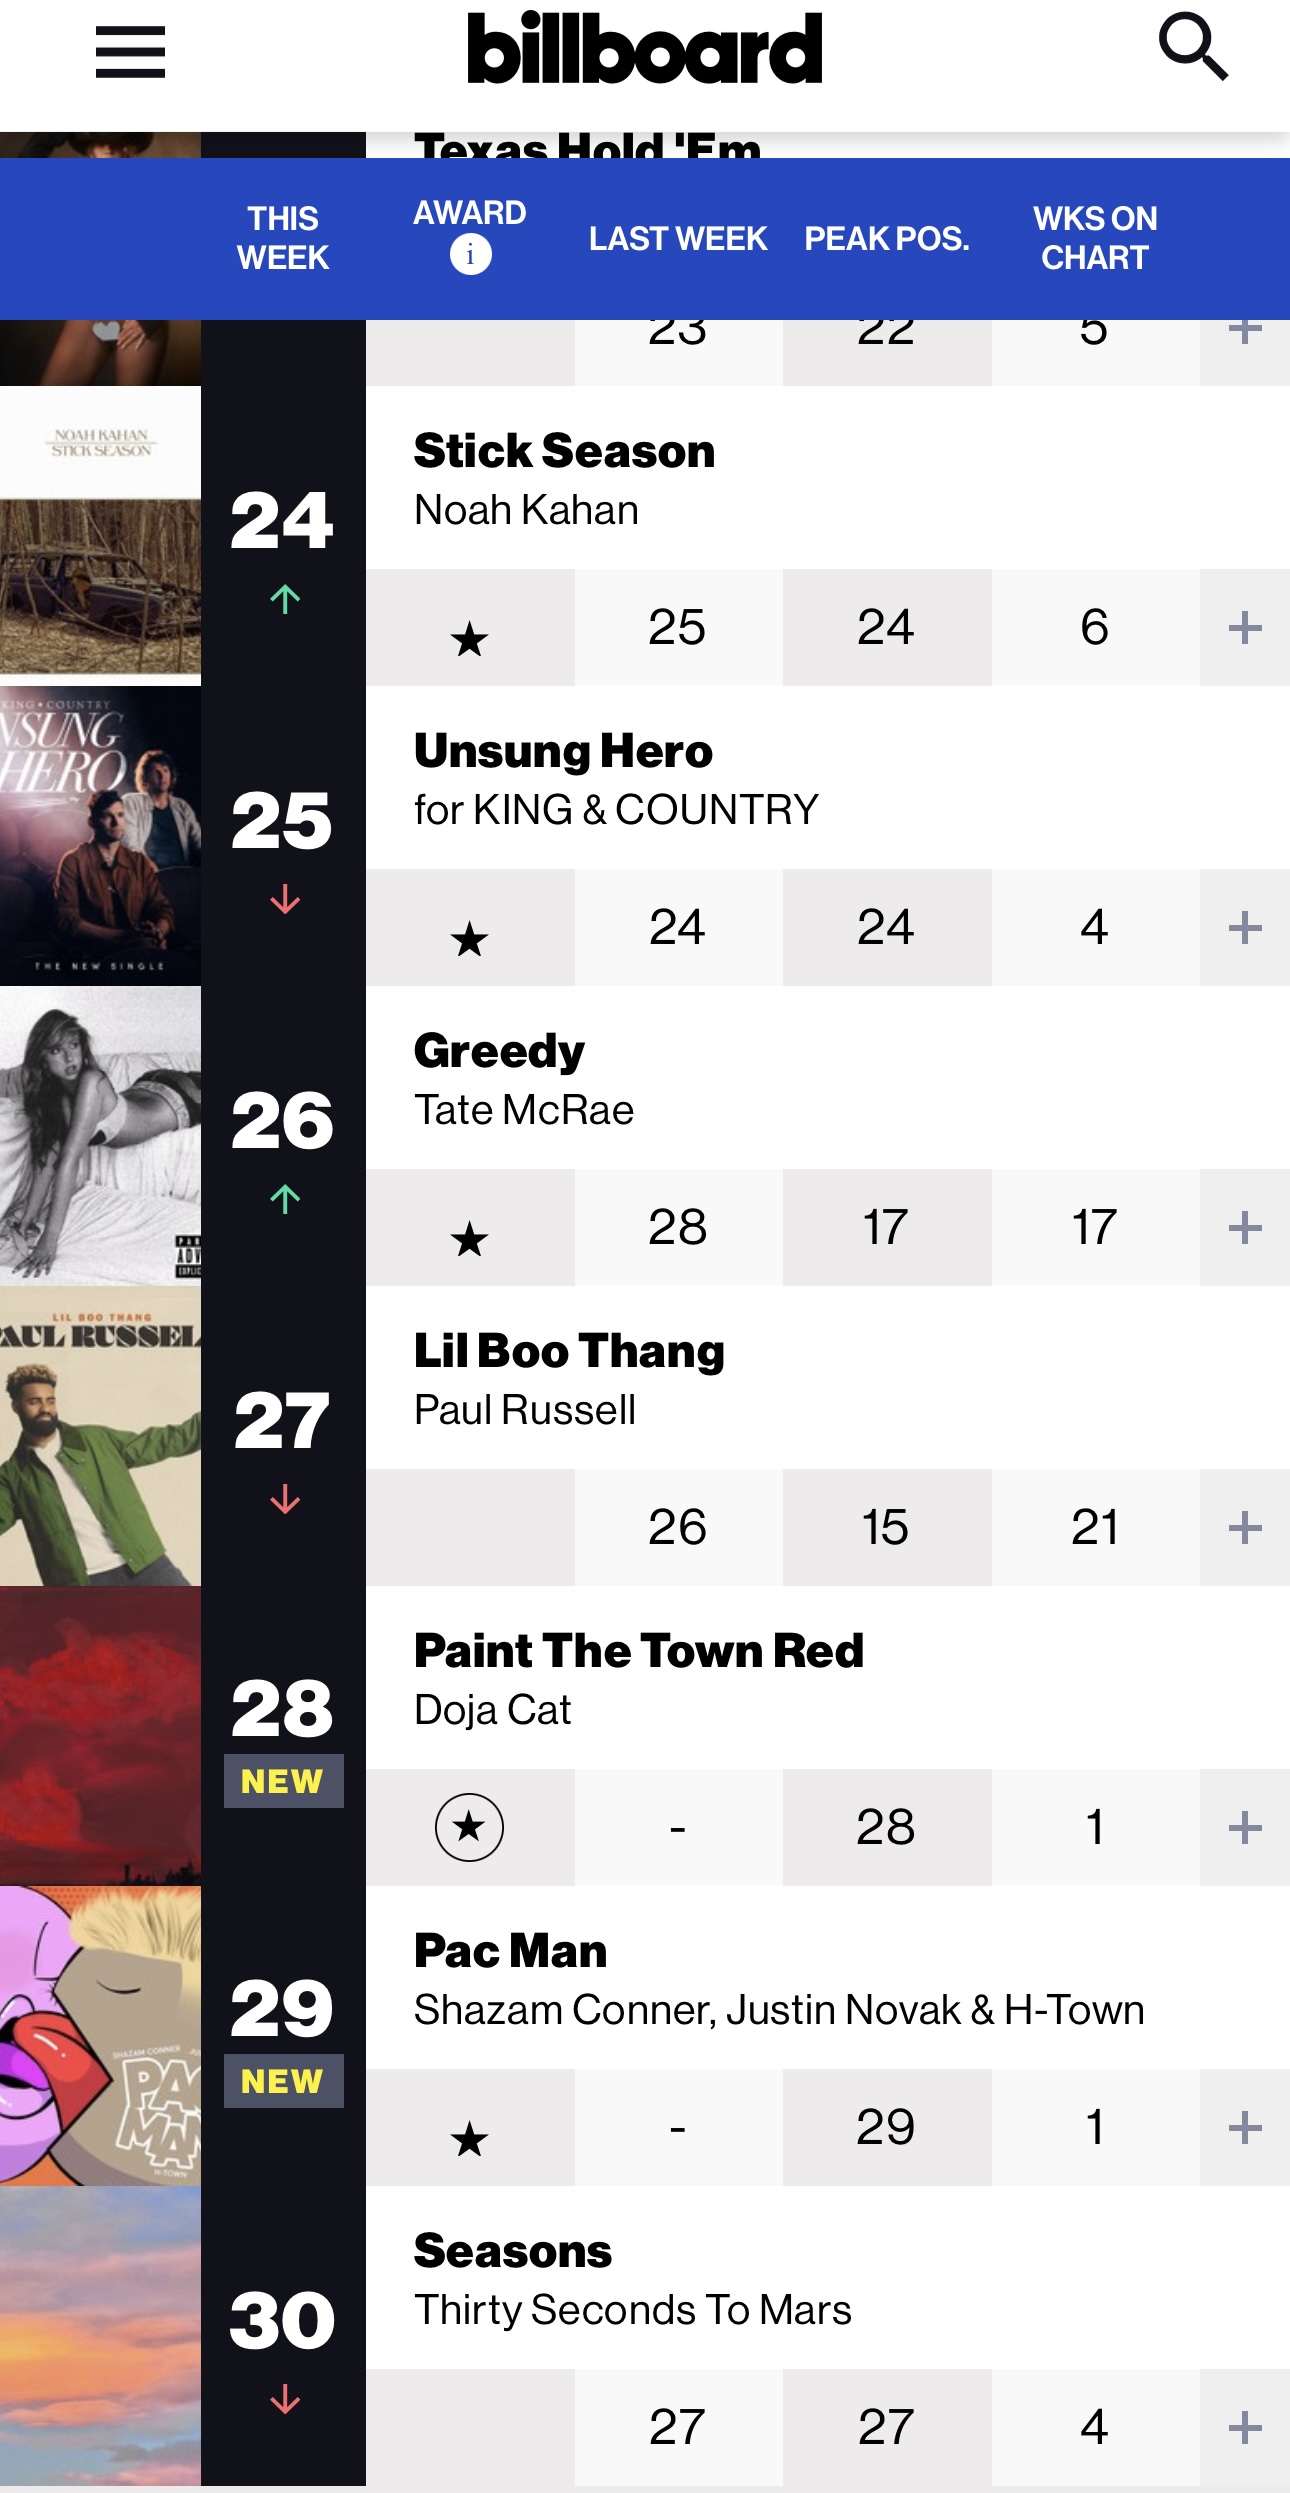 Shazam Conner, Justin Novak & H-Town New Single "Pac Man" Debuts on Billboard AC Charts At #29 